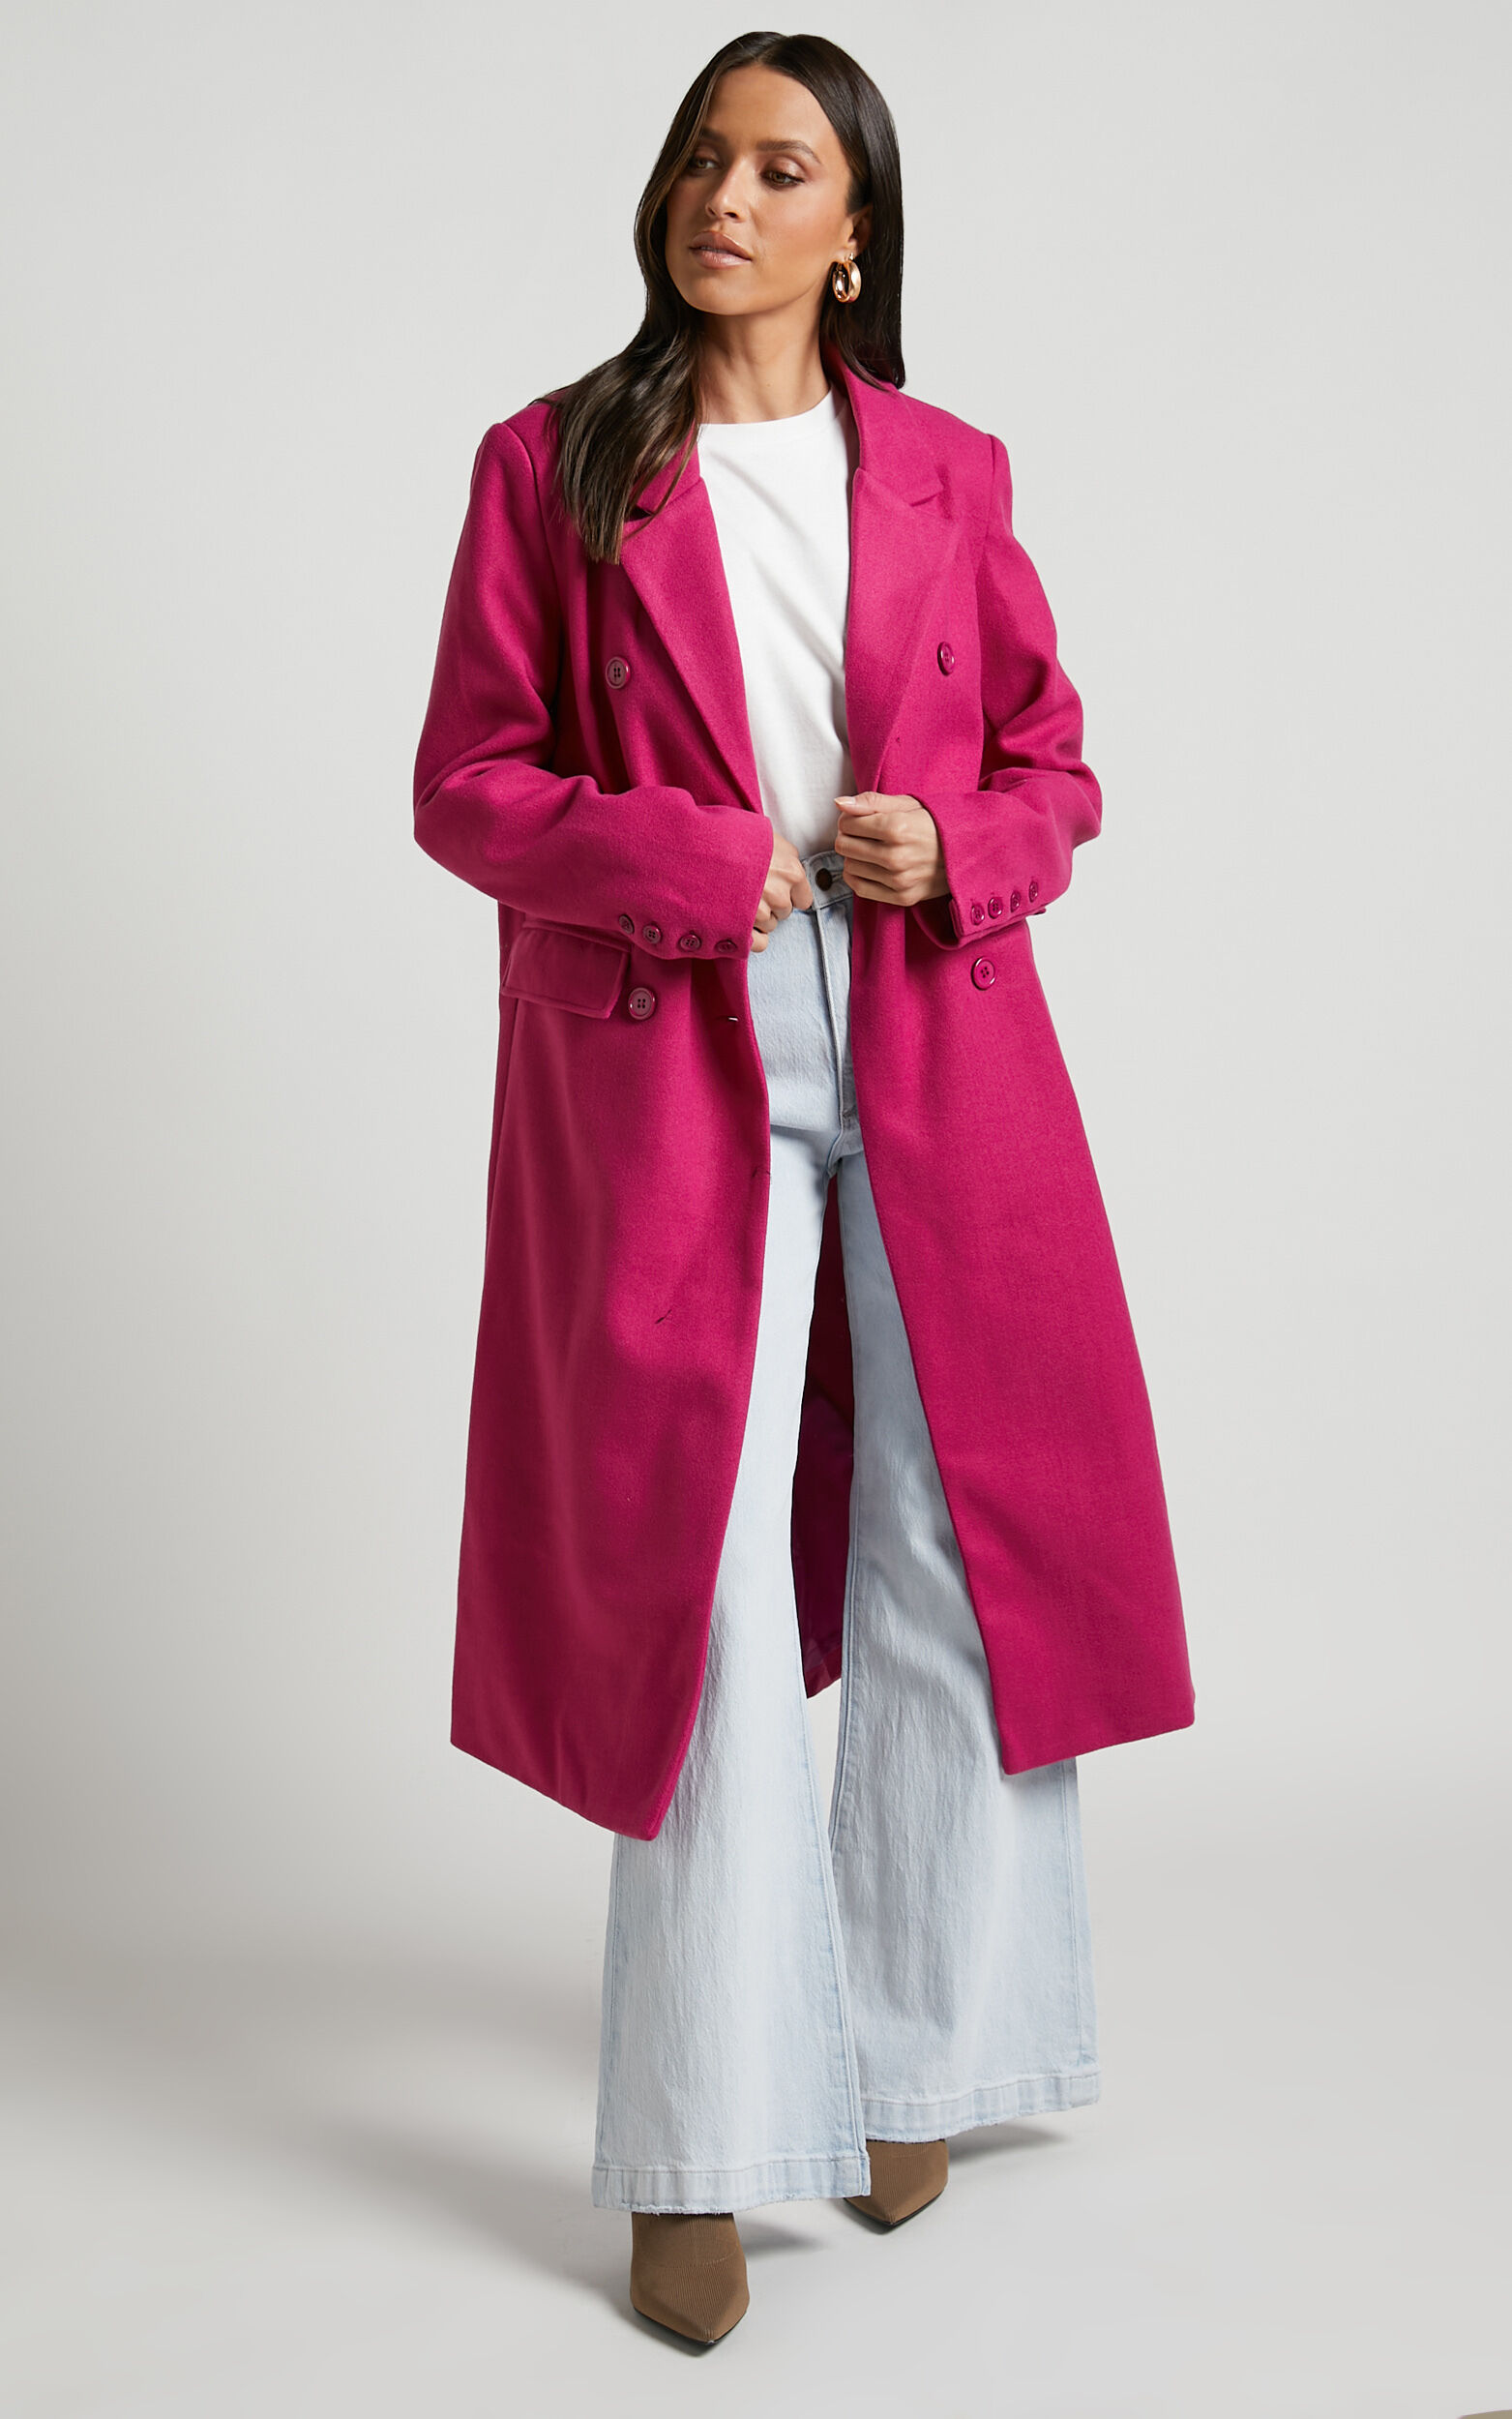 Socorro Tailored Longline Coat in Hot Pink - 06, PNK1, super-hi-res image number null